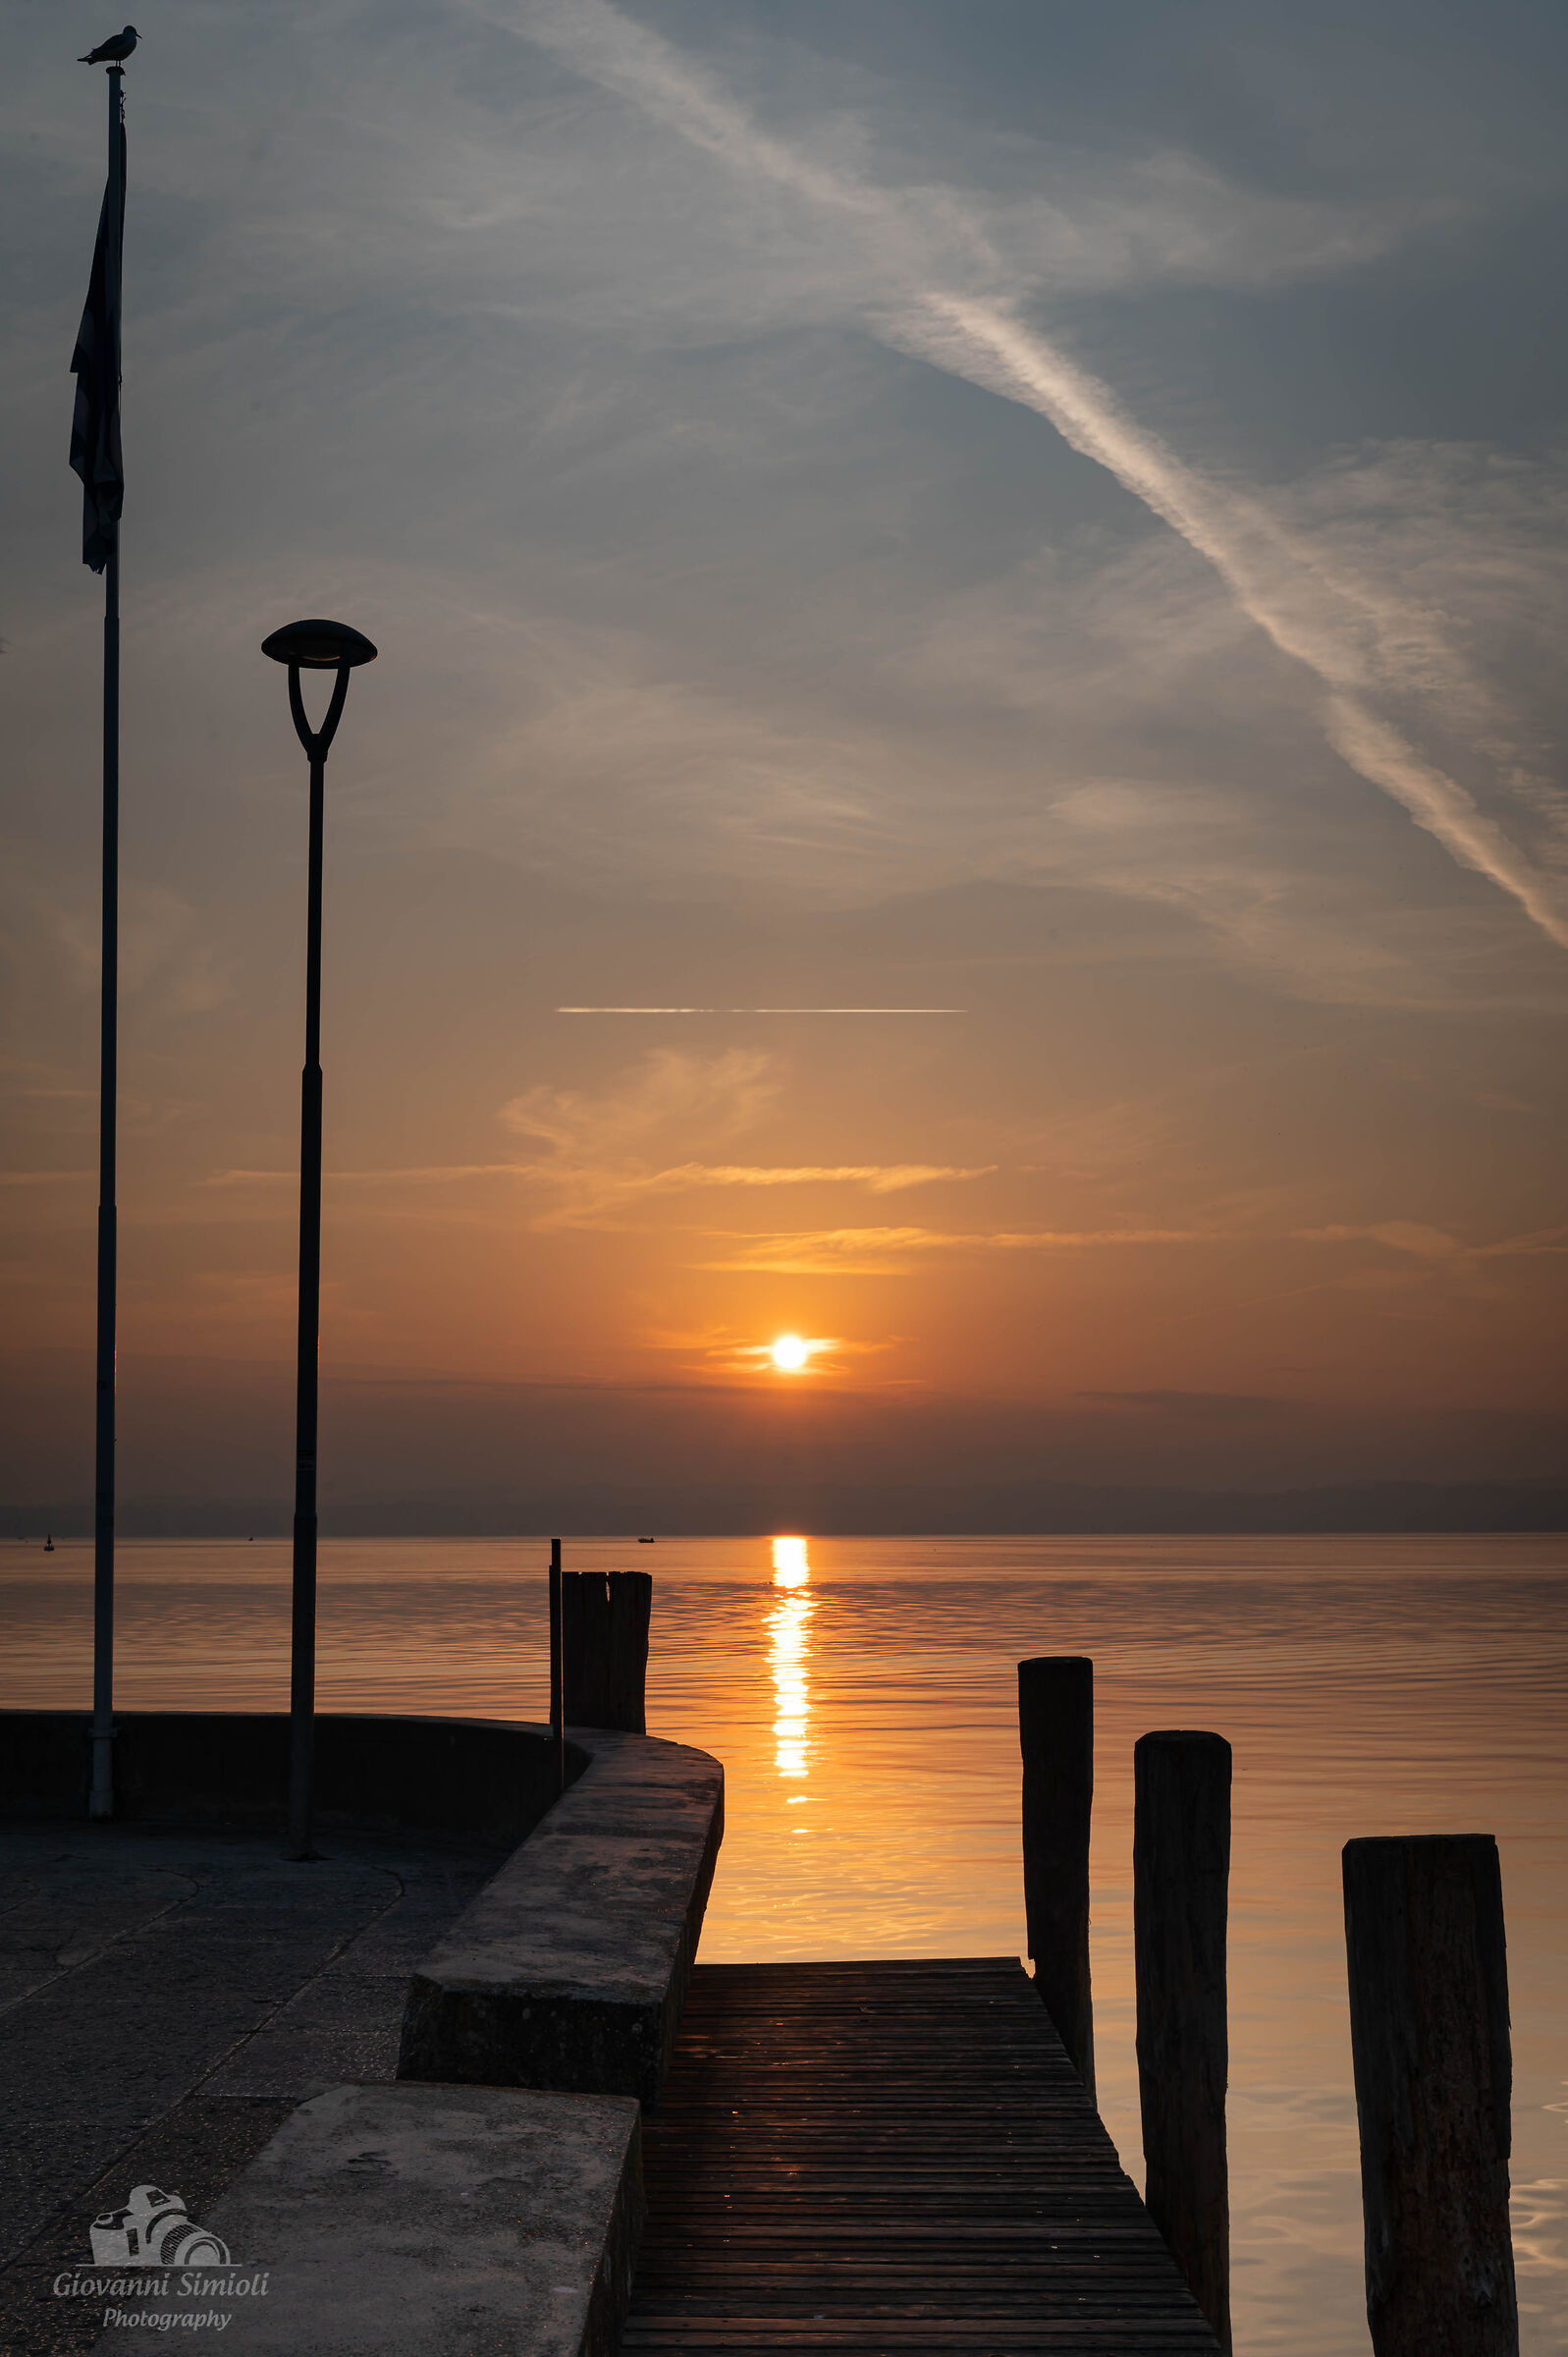 Sunset in Sirmione on Lake Garda...